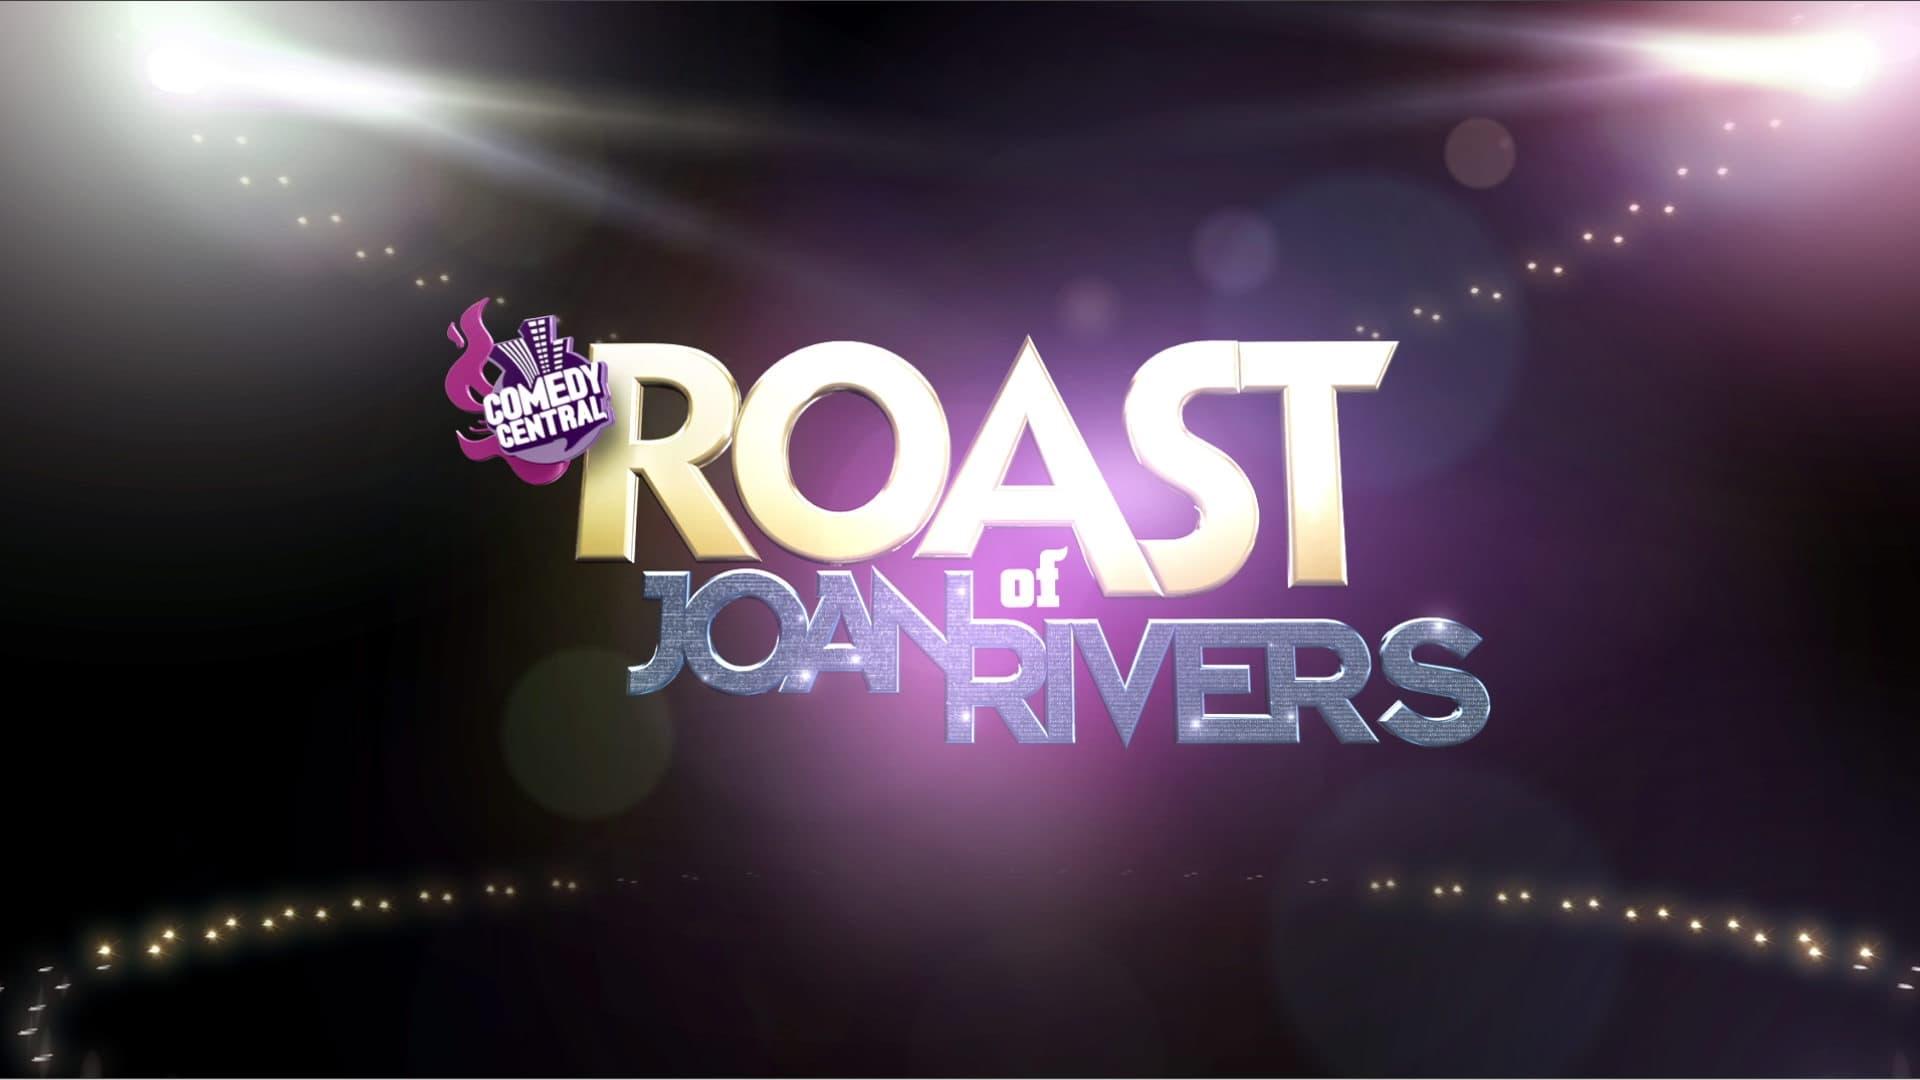 Comedy Central Roast of Joan Rivers backdrop